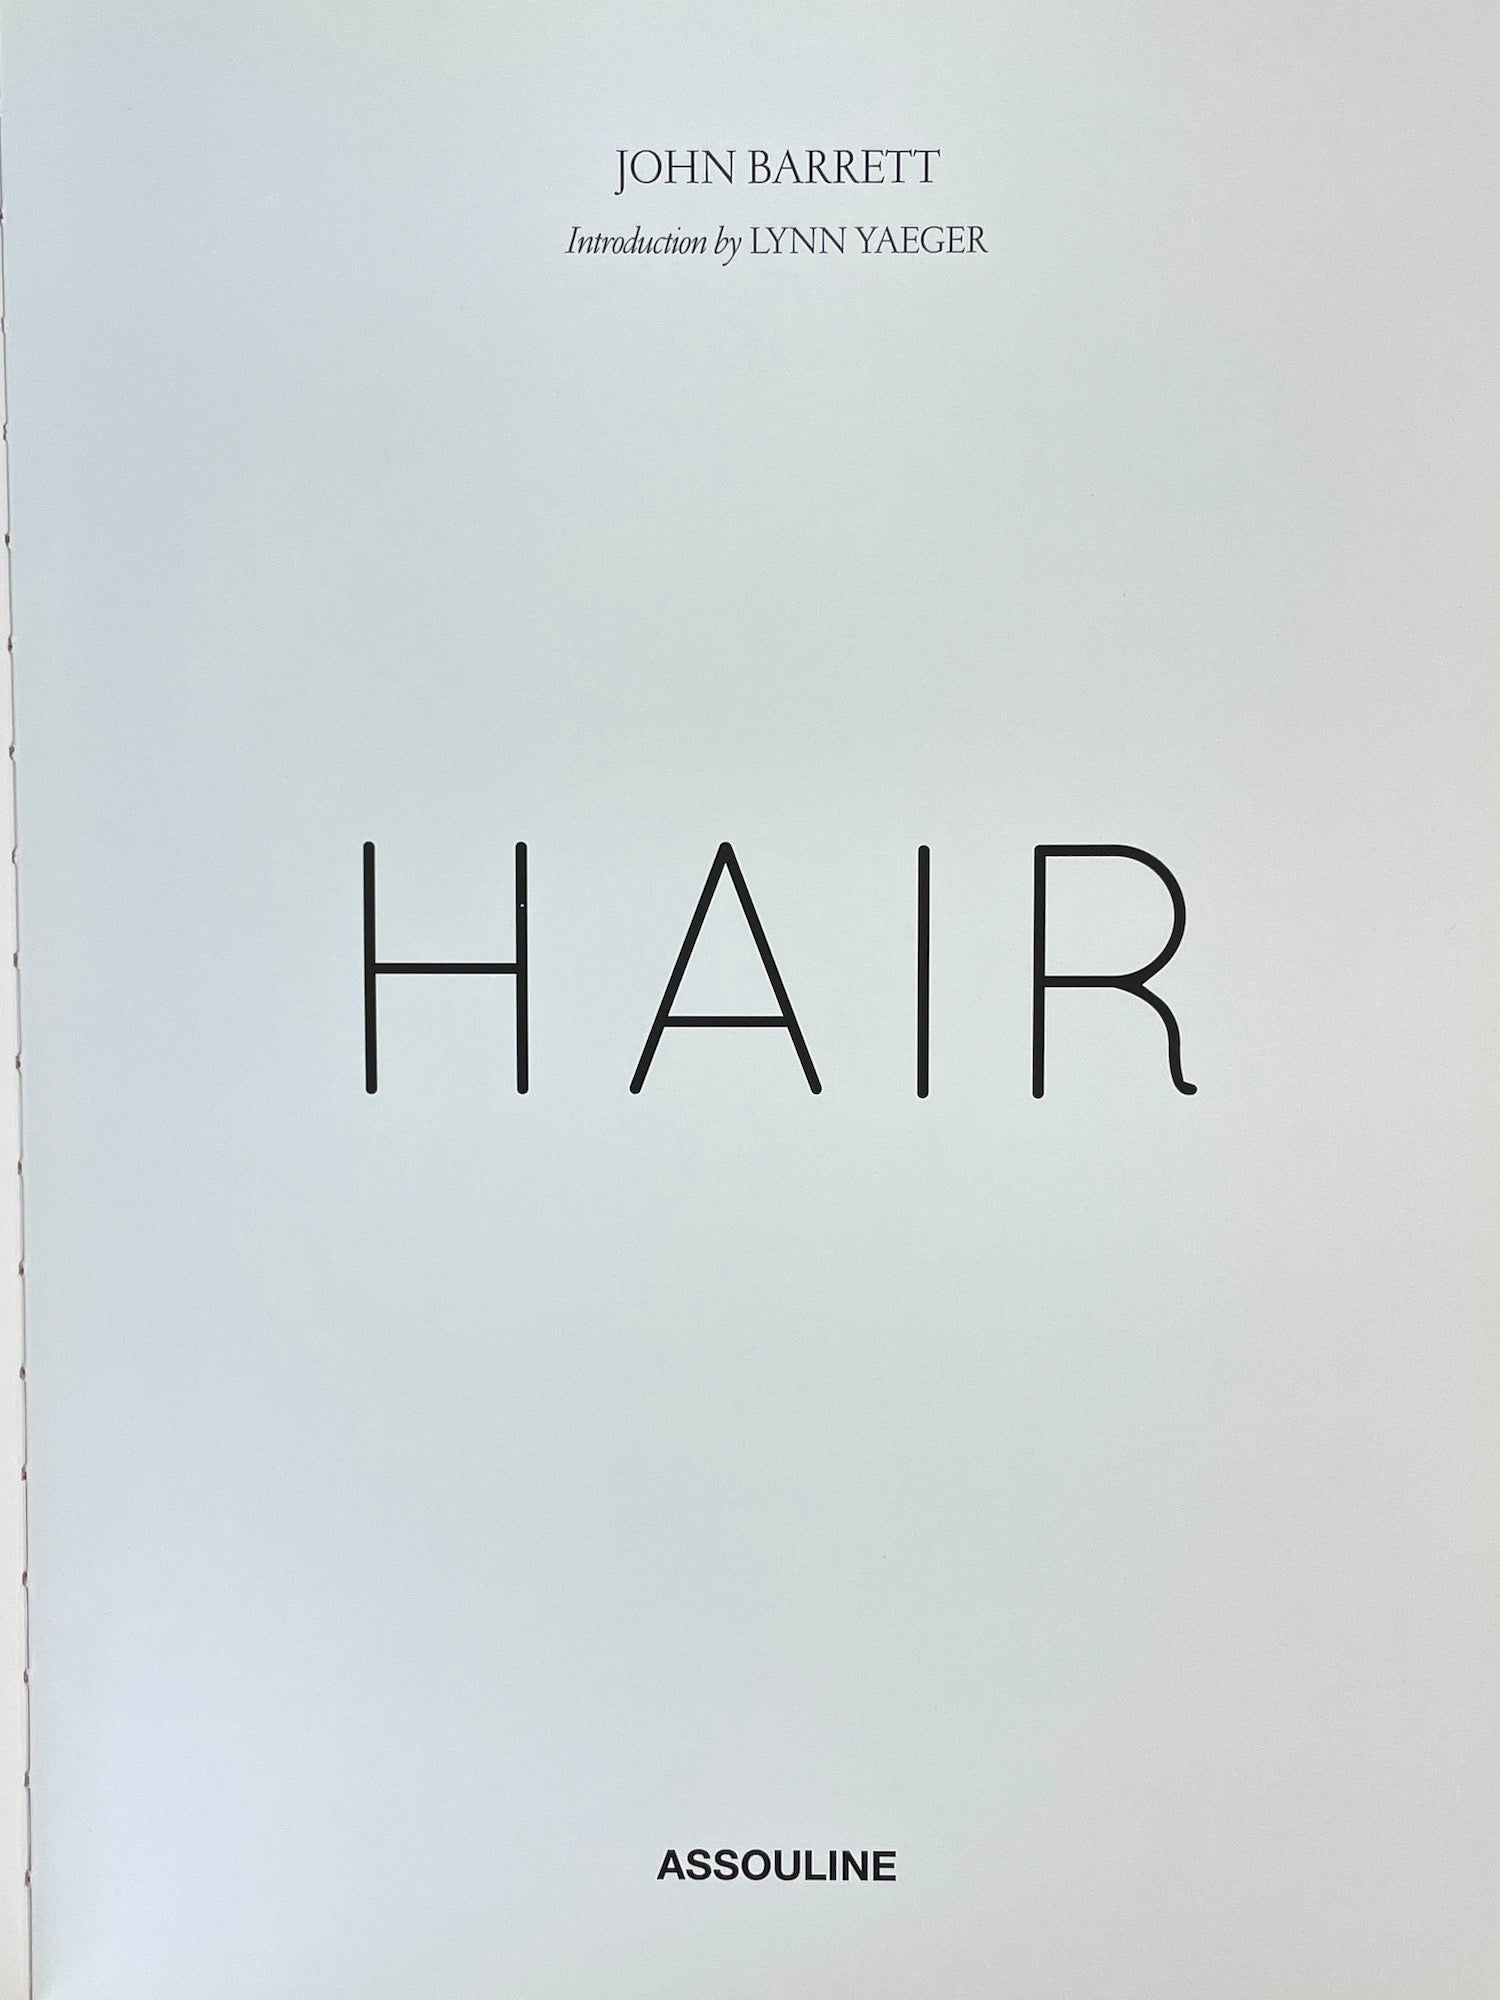 [Hair] John Barrett (Introduction by Lynn Yaeger) Assouline Publishing. 2017. First.